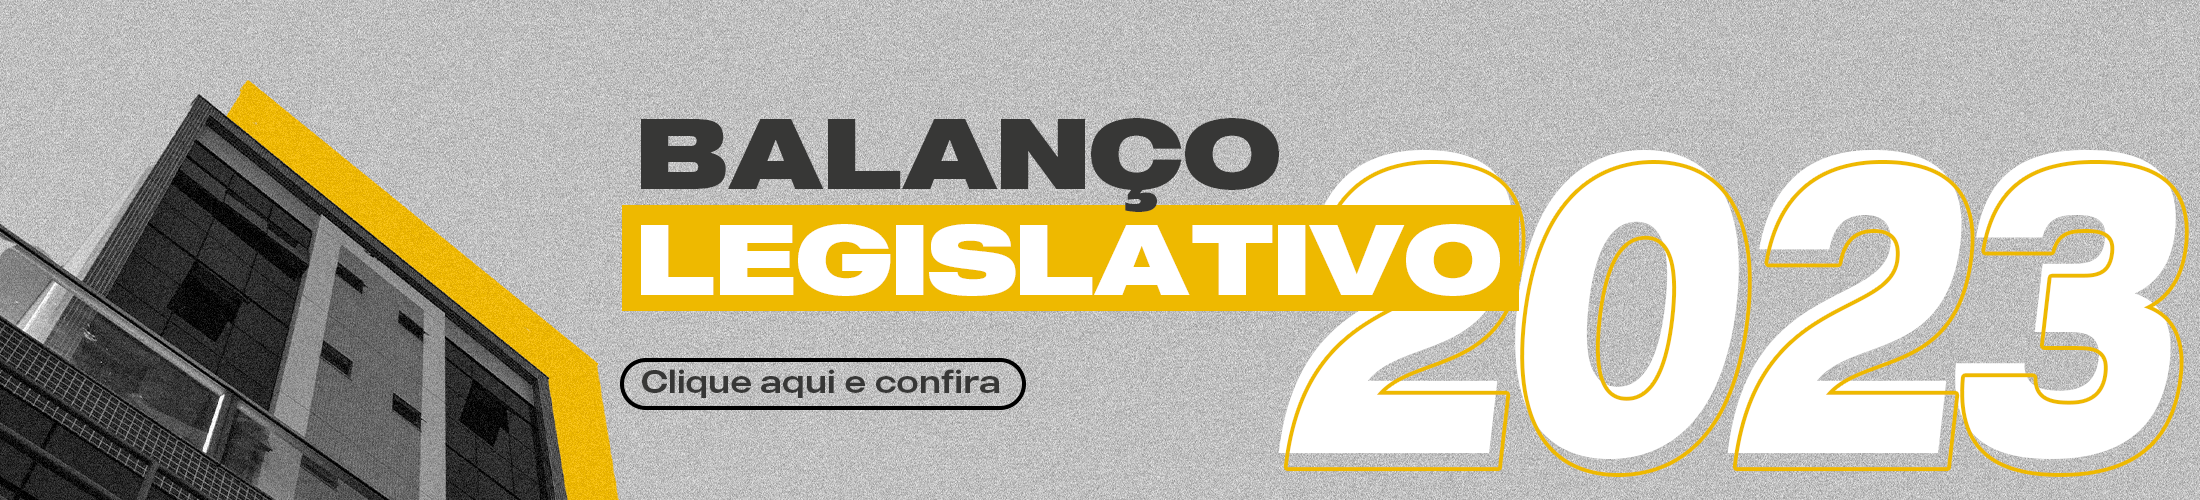 banner_balano_legislativo